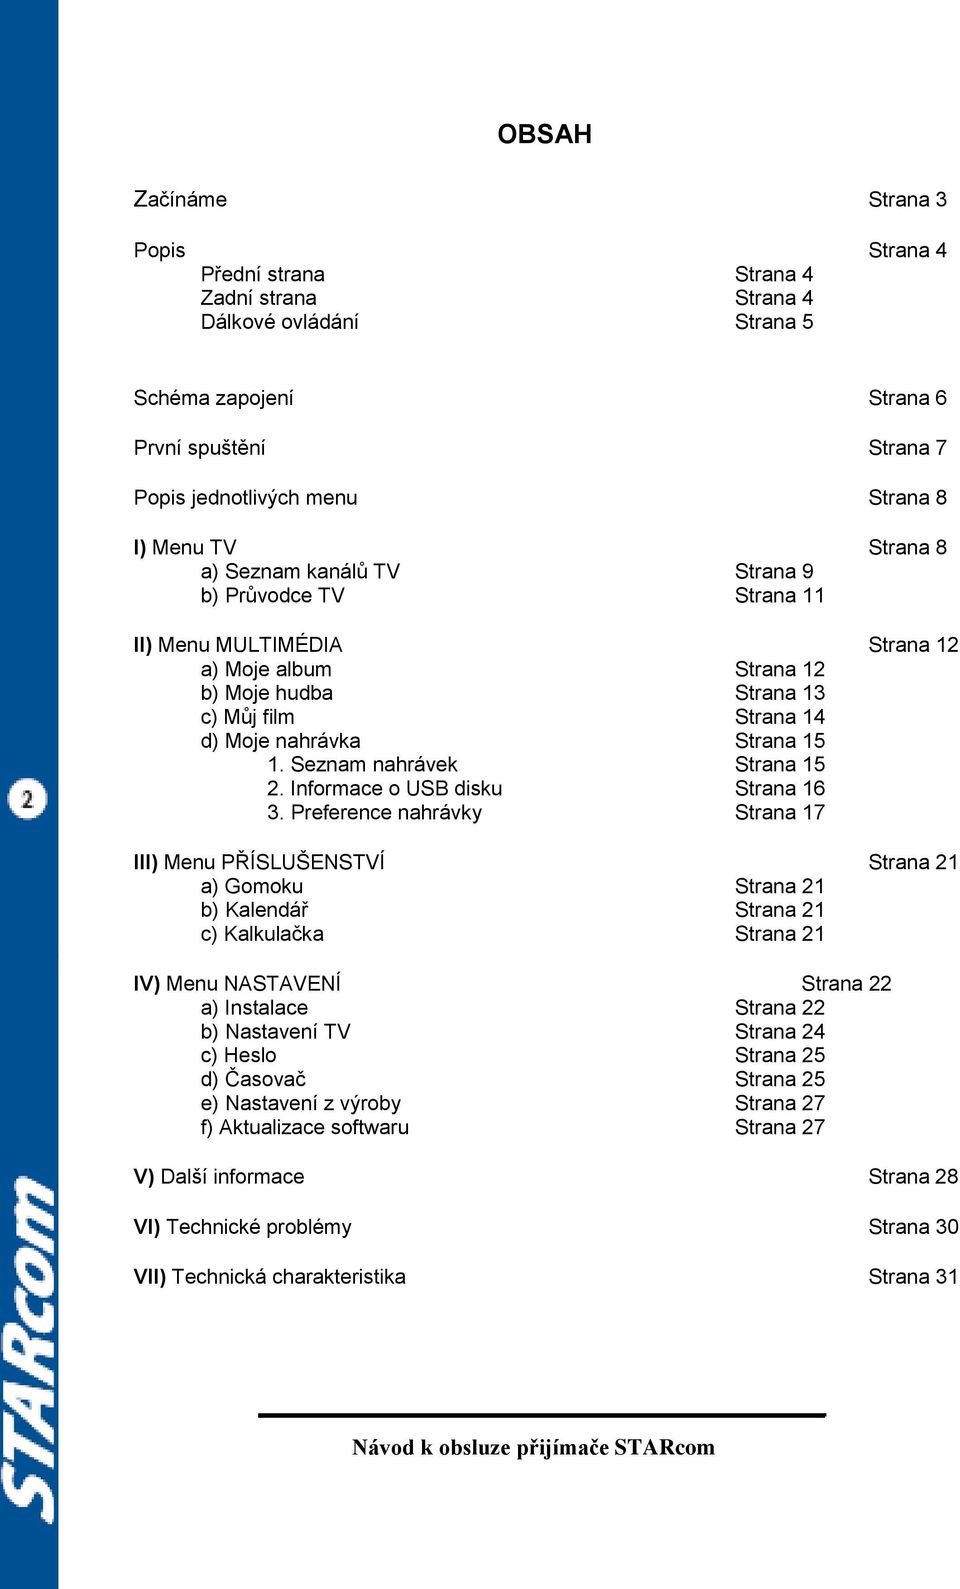 Seznam nahrávek Strana 15 2. Informace o USB disku Strana 16 3.